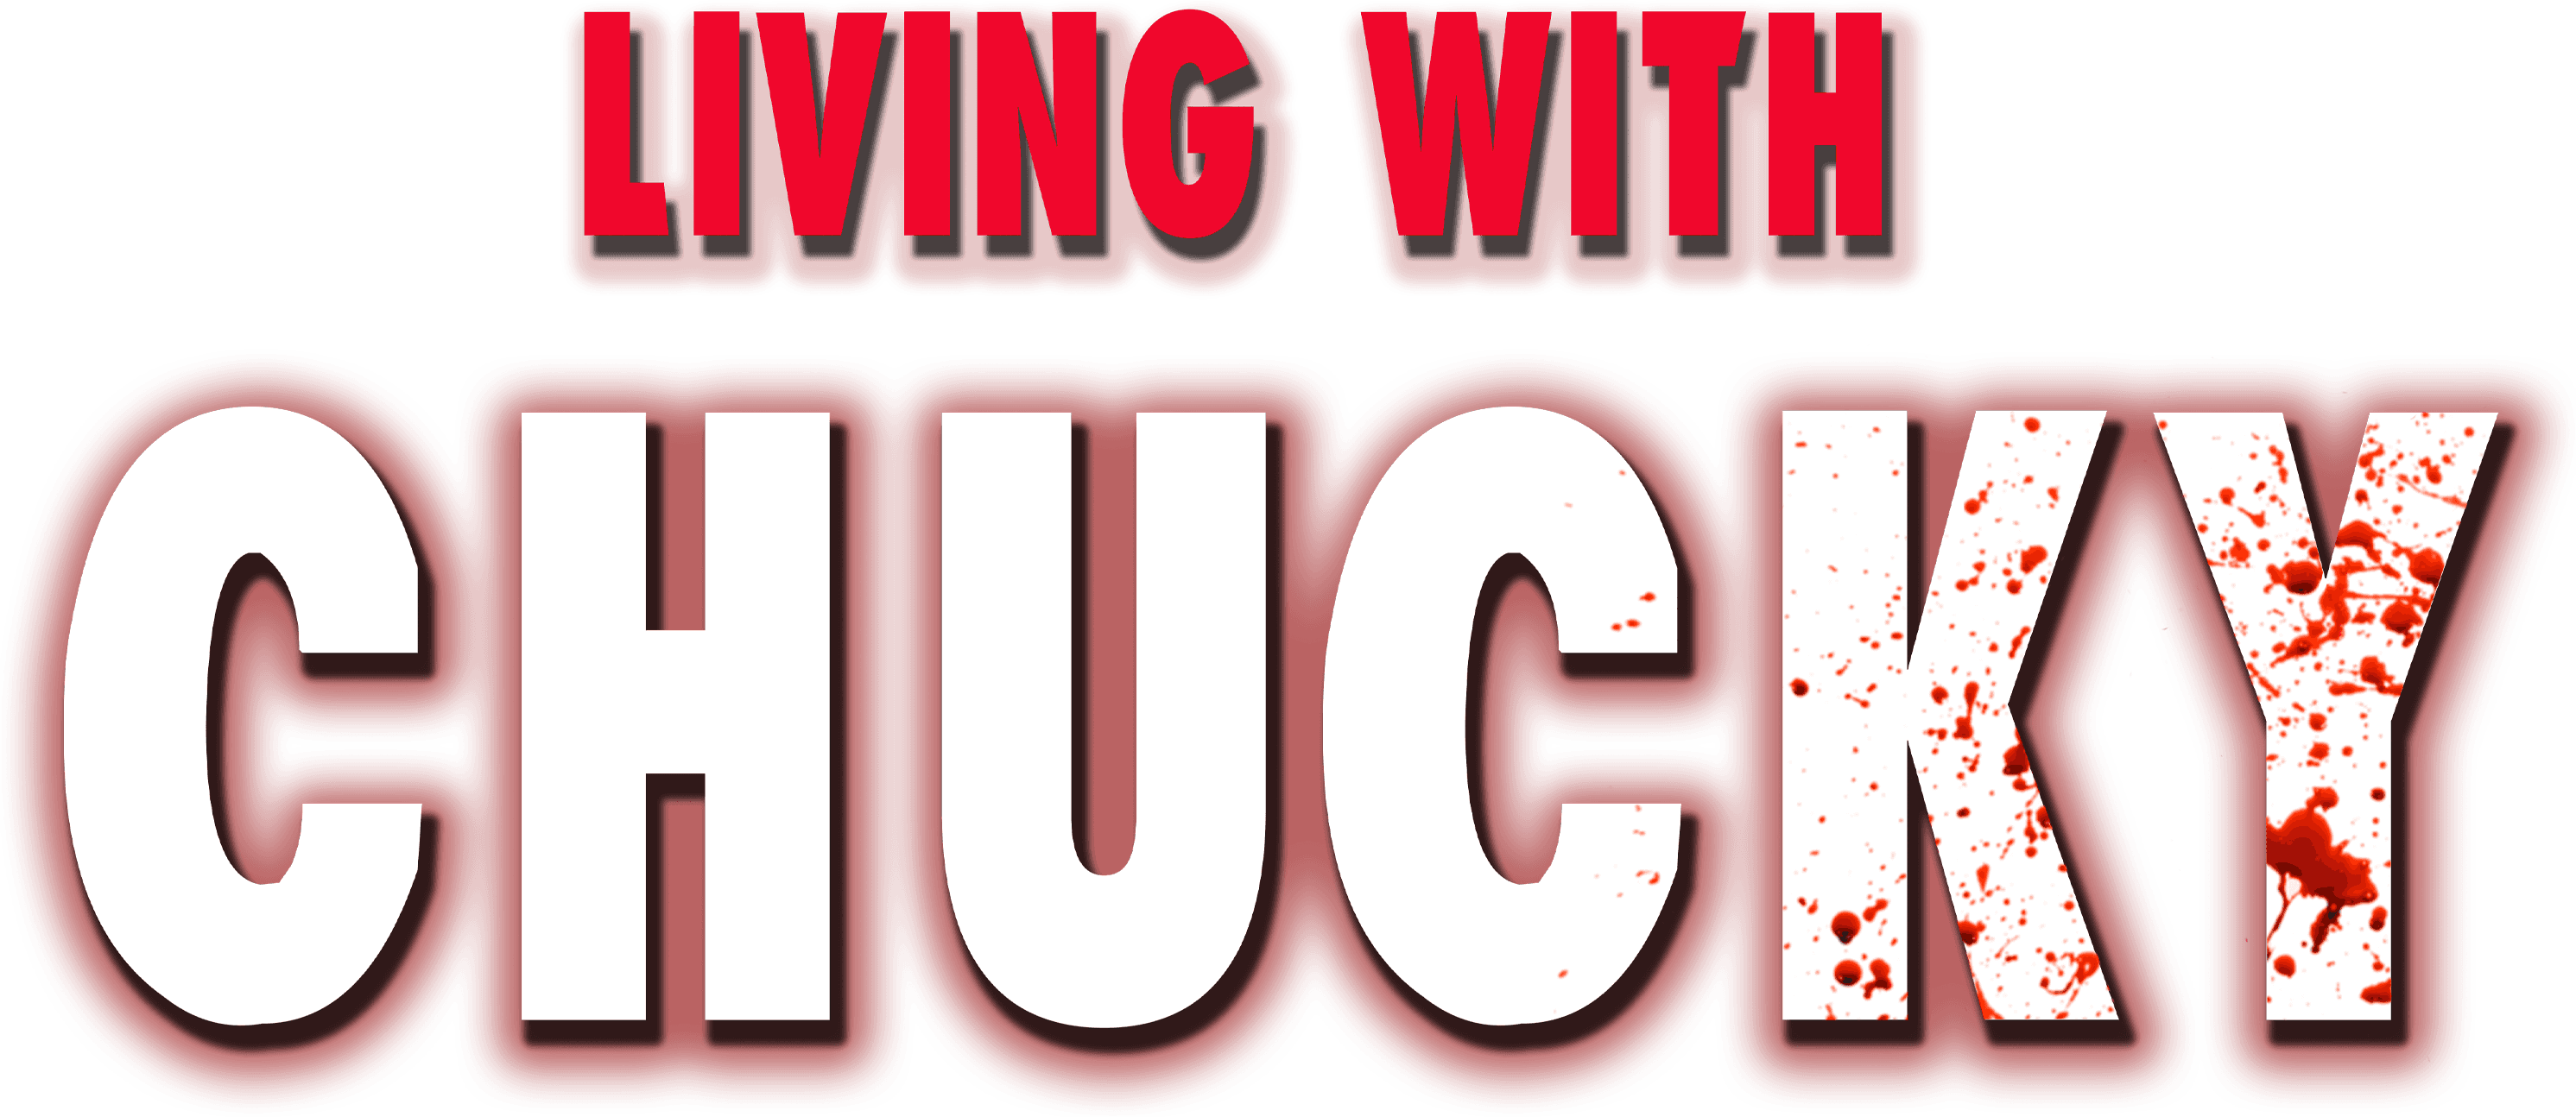 Living with Chucky logo